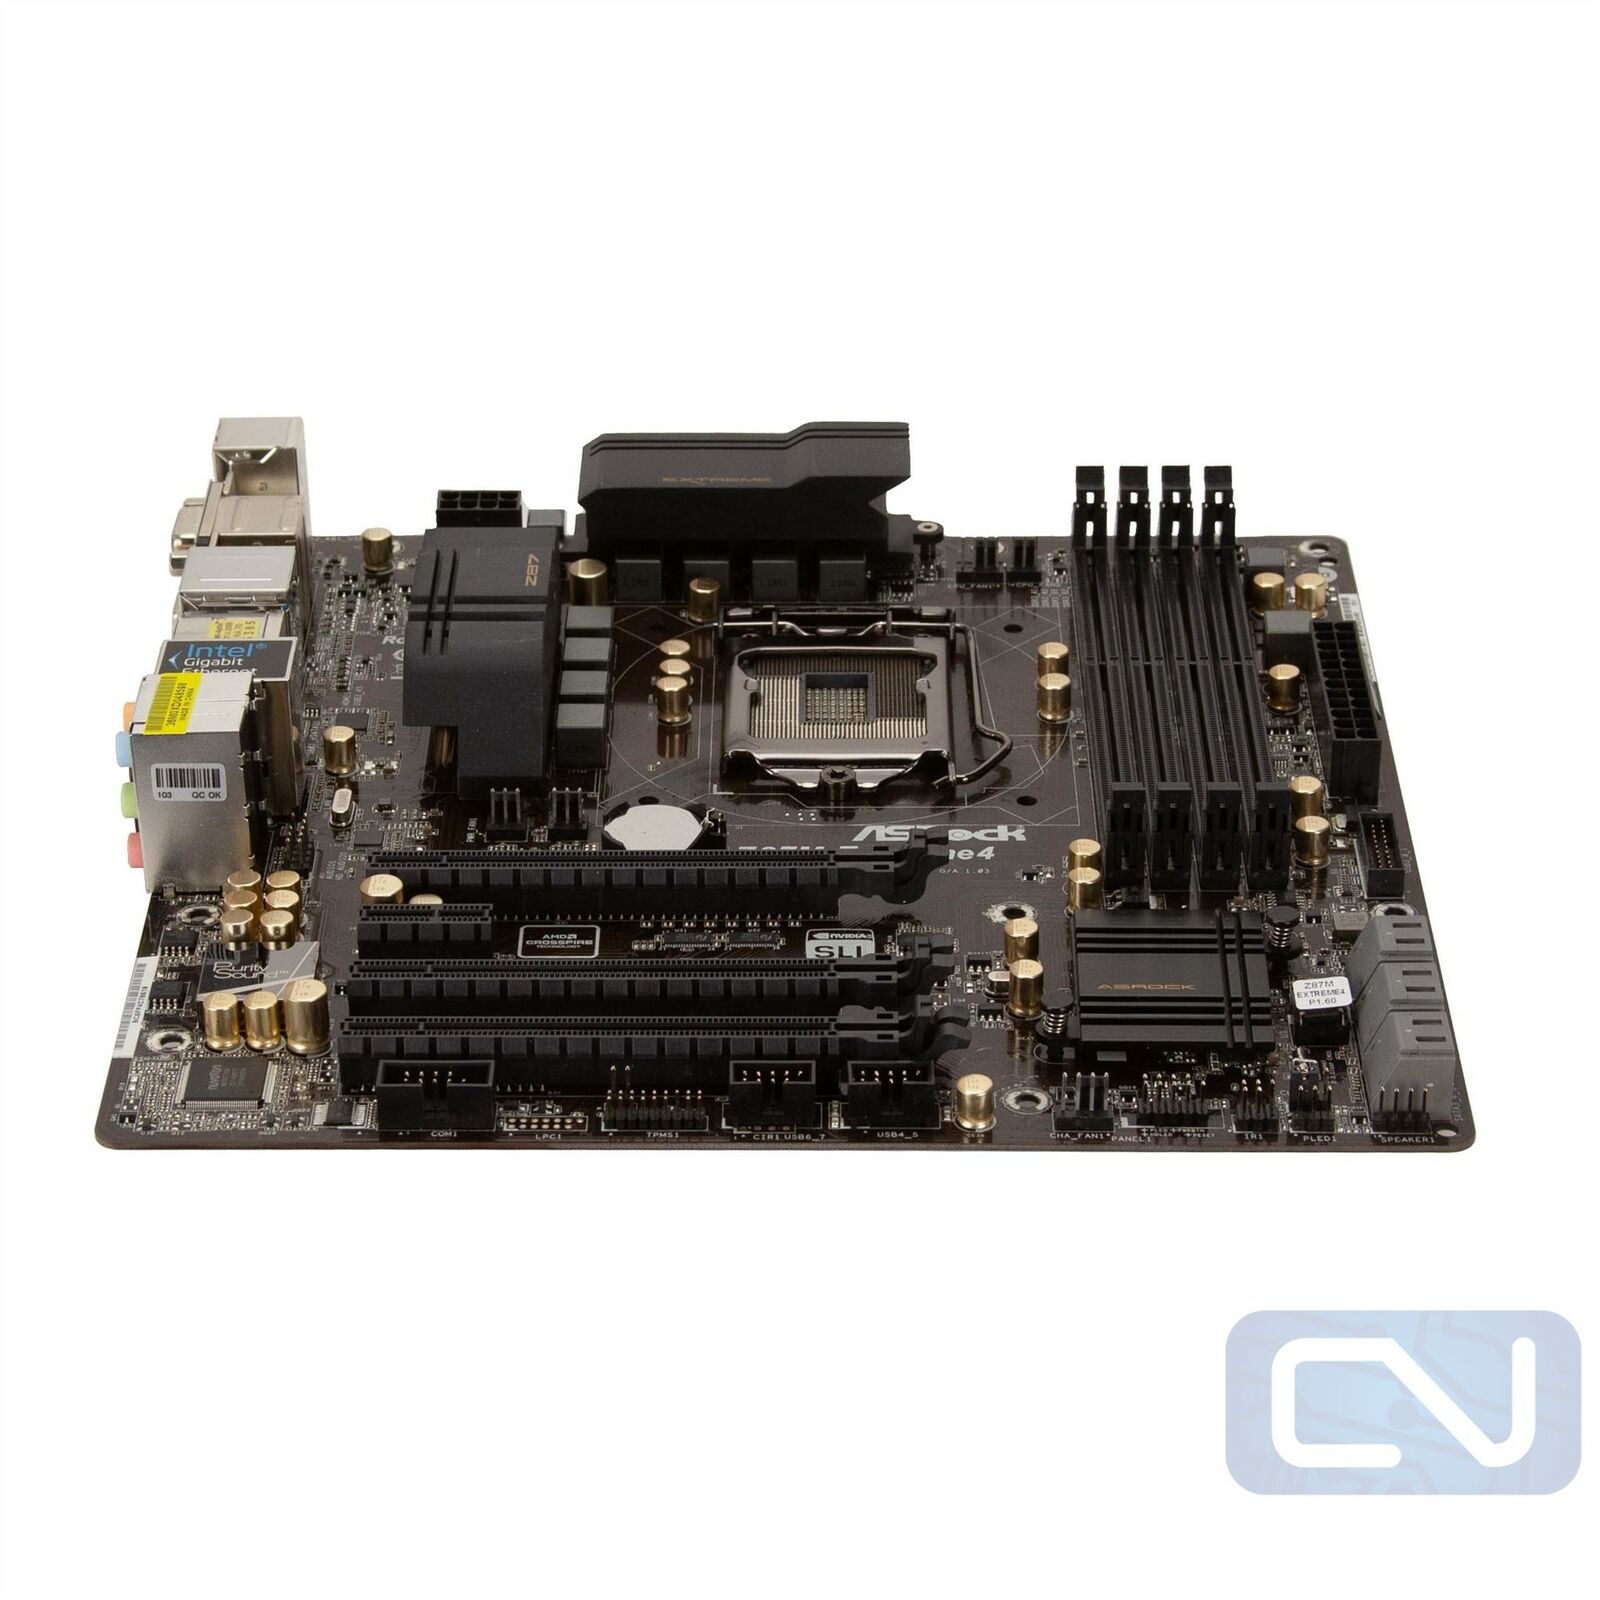 ASRock Z87M Extreme4 Micro ATX Intel LGA1150 DDR3 eSATA HDMI Motherboard 